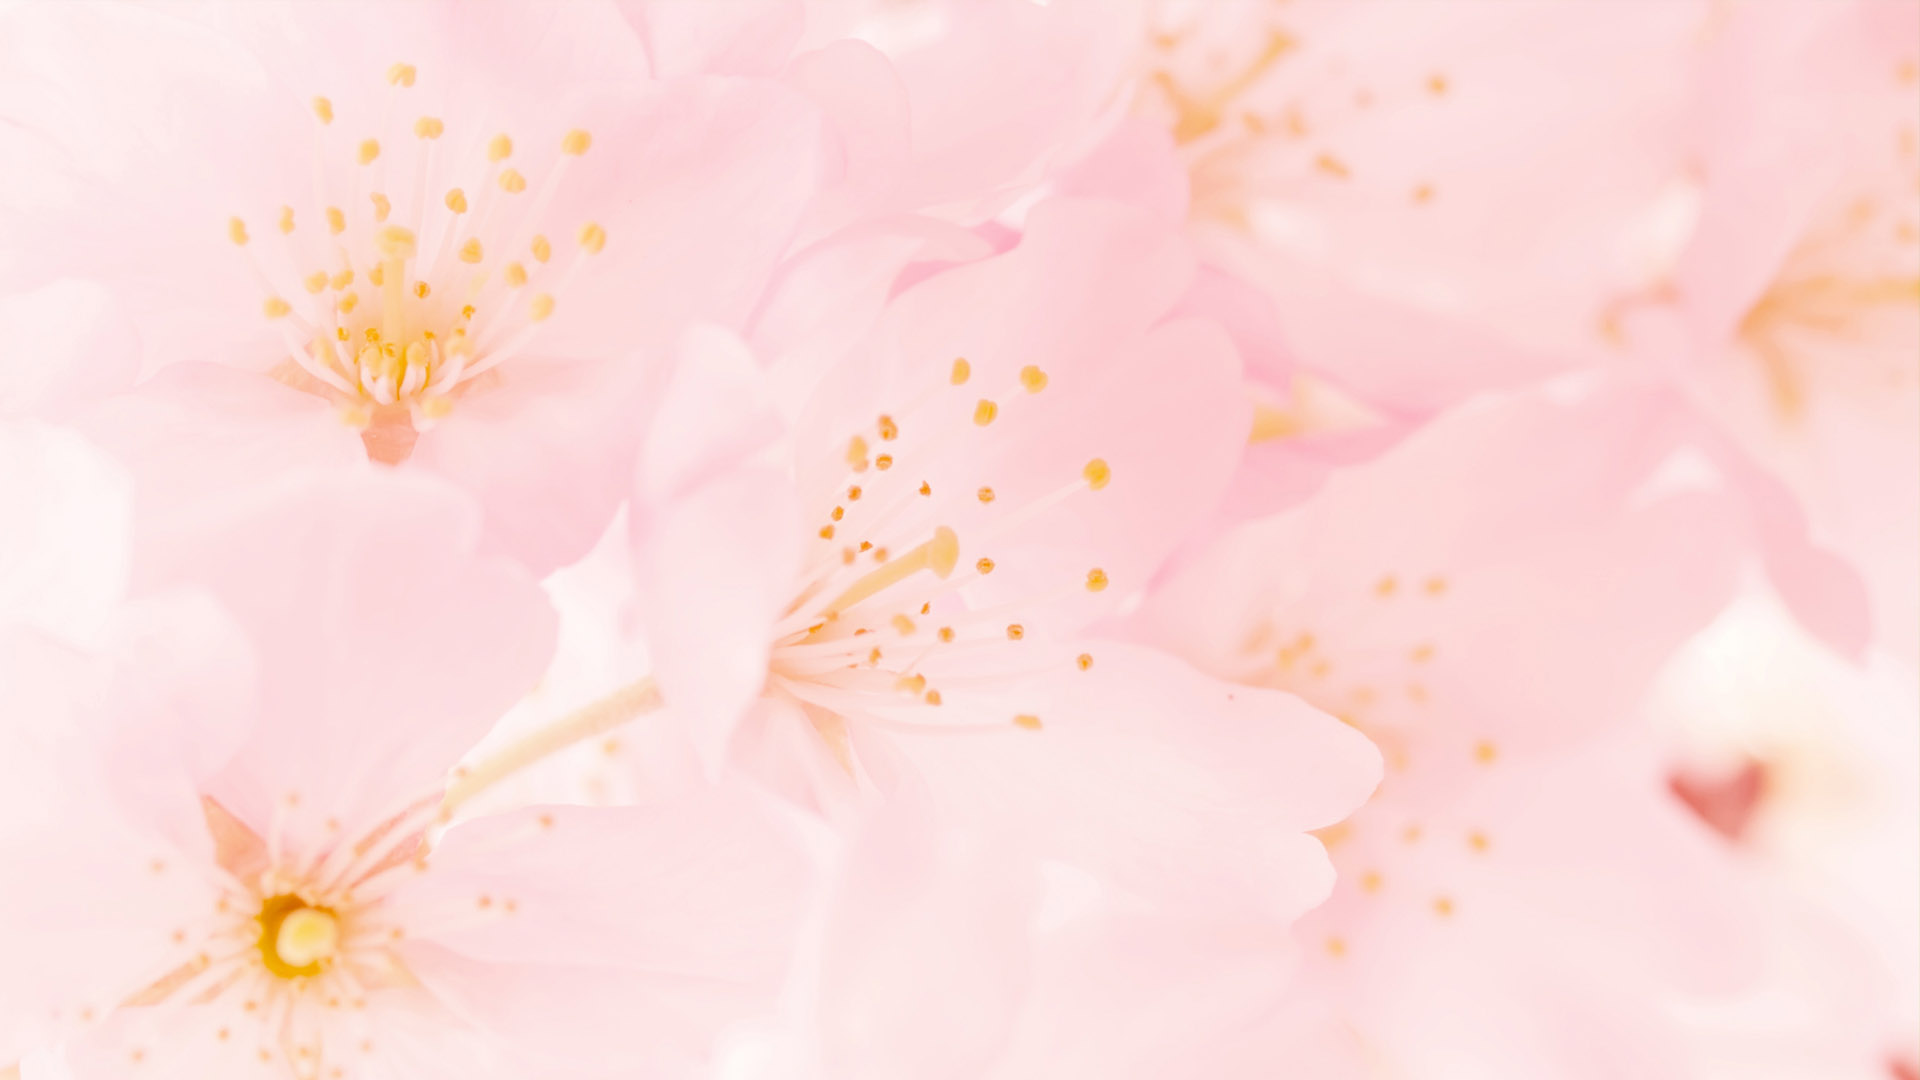 Pink aesthetic desktop background image